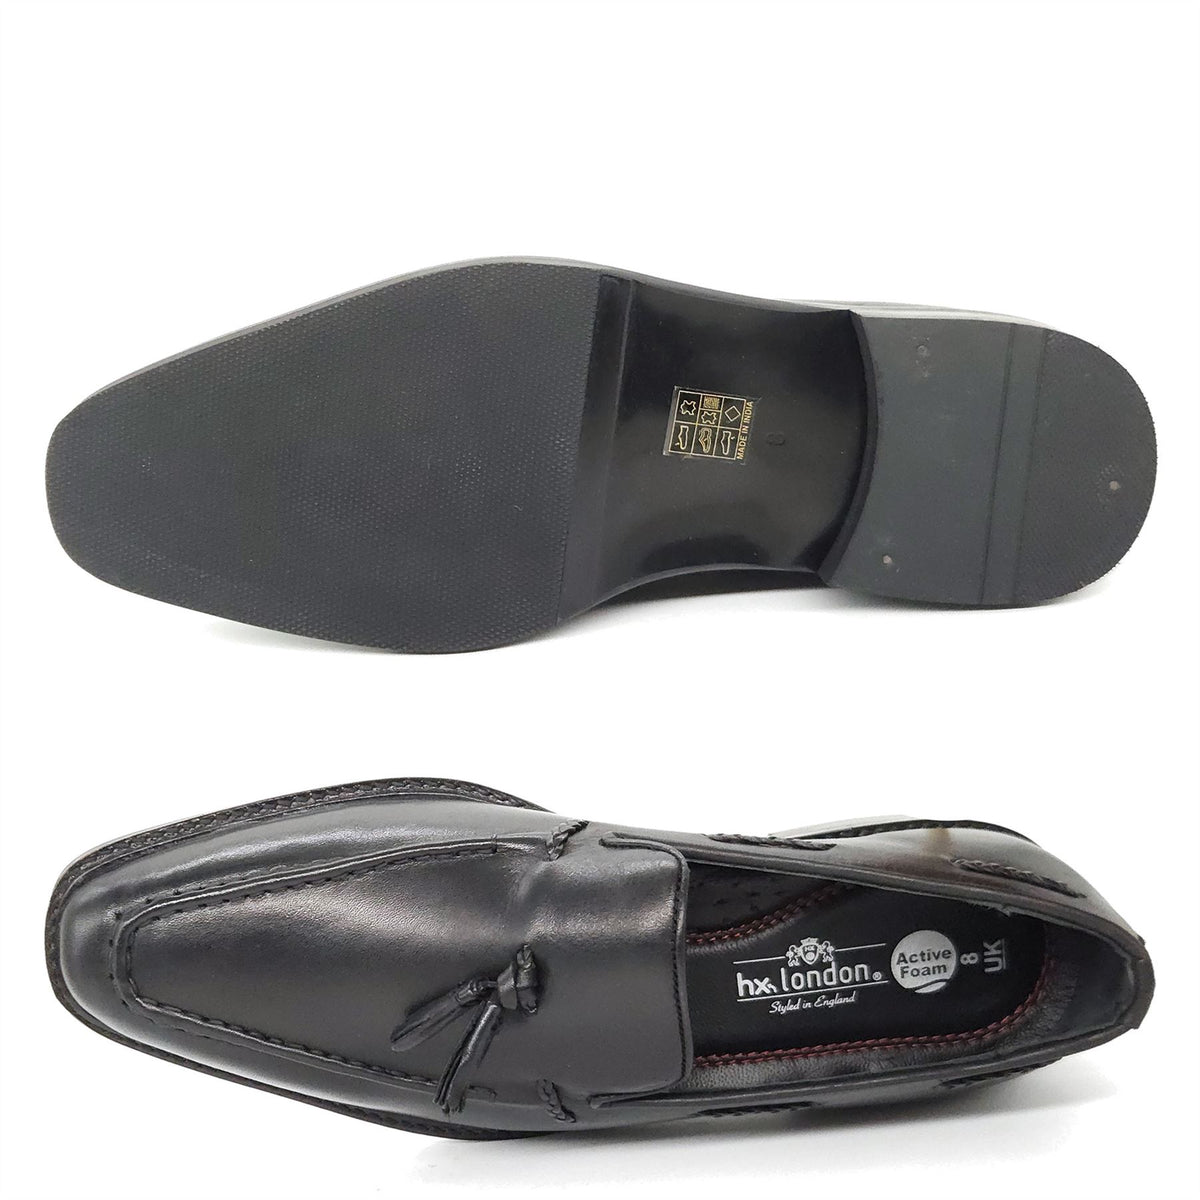 HX London Beddington Tassel Leather Loafers